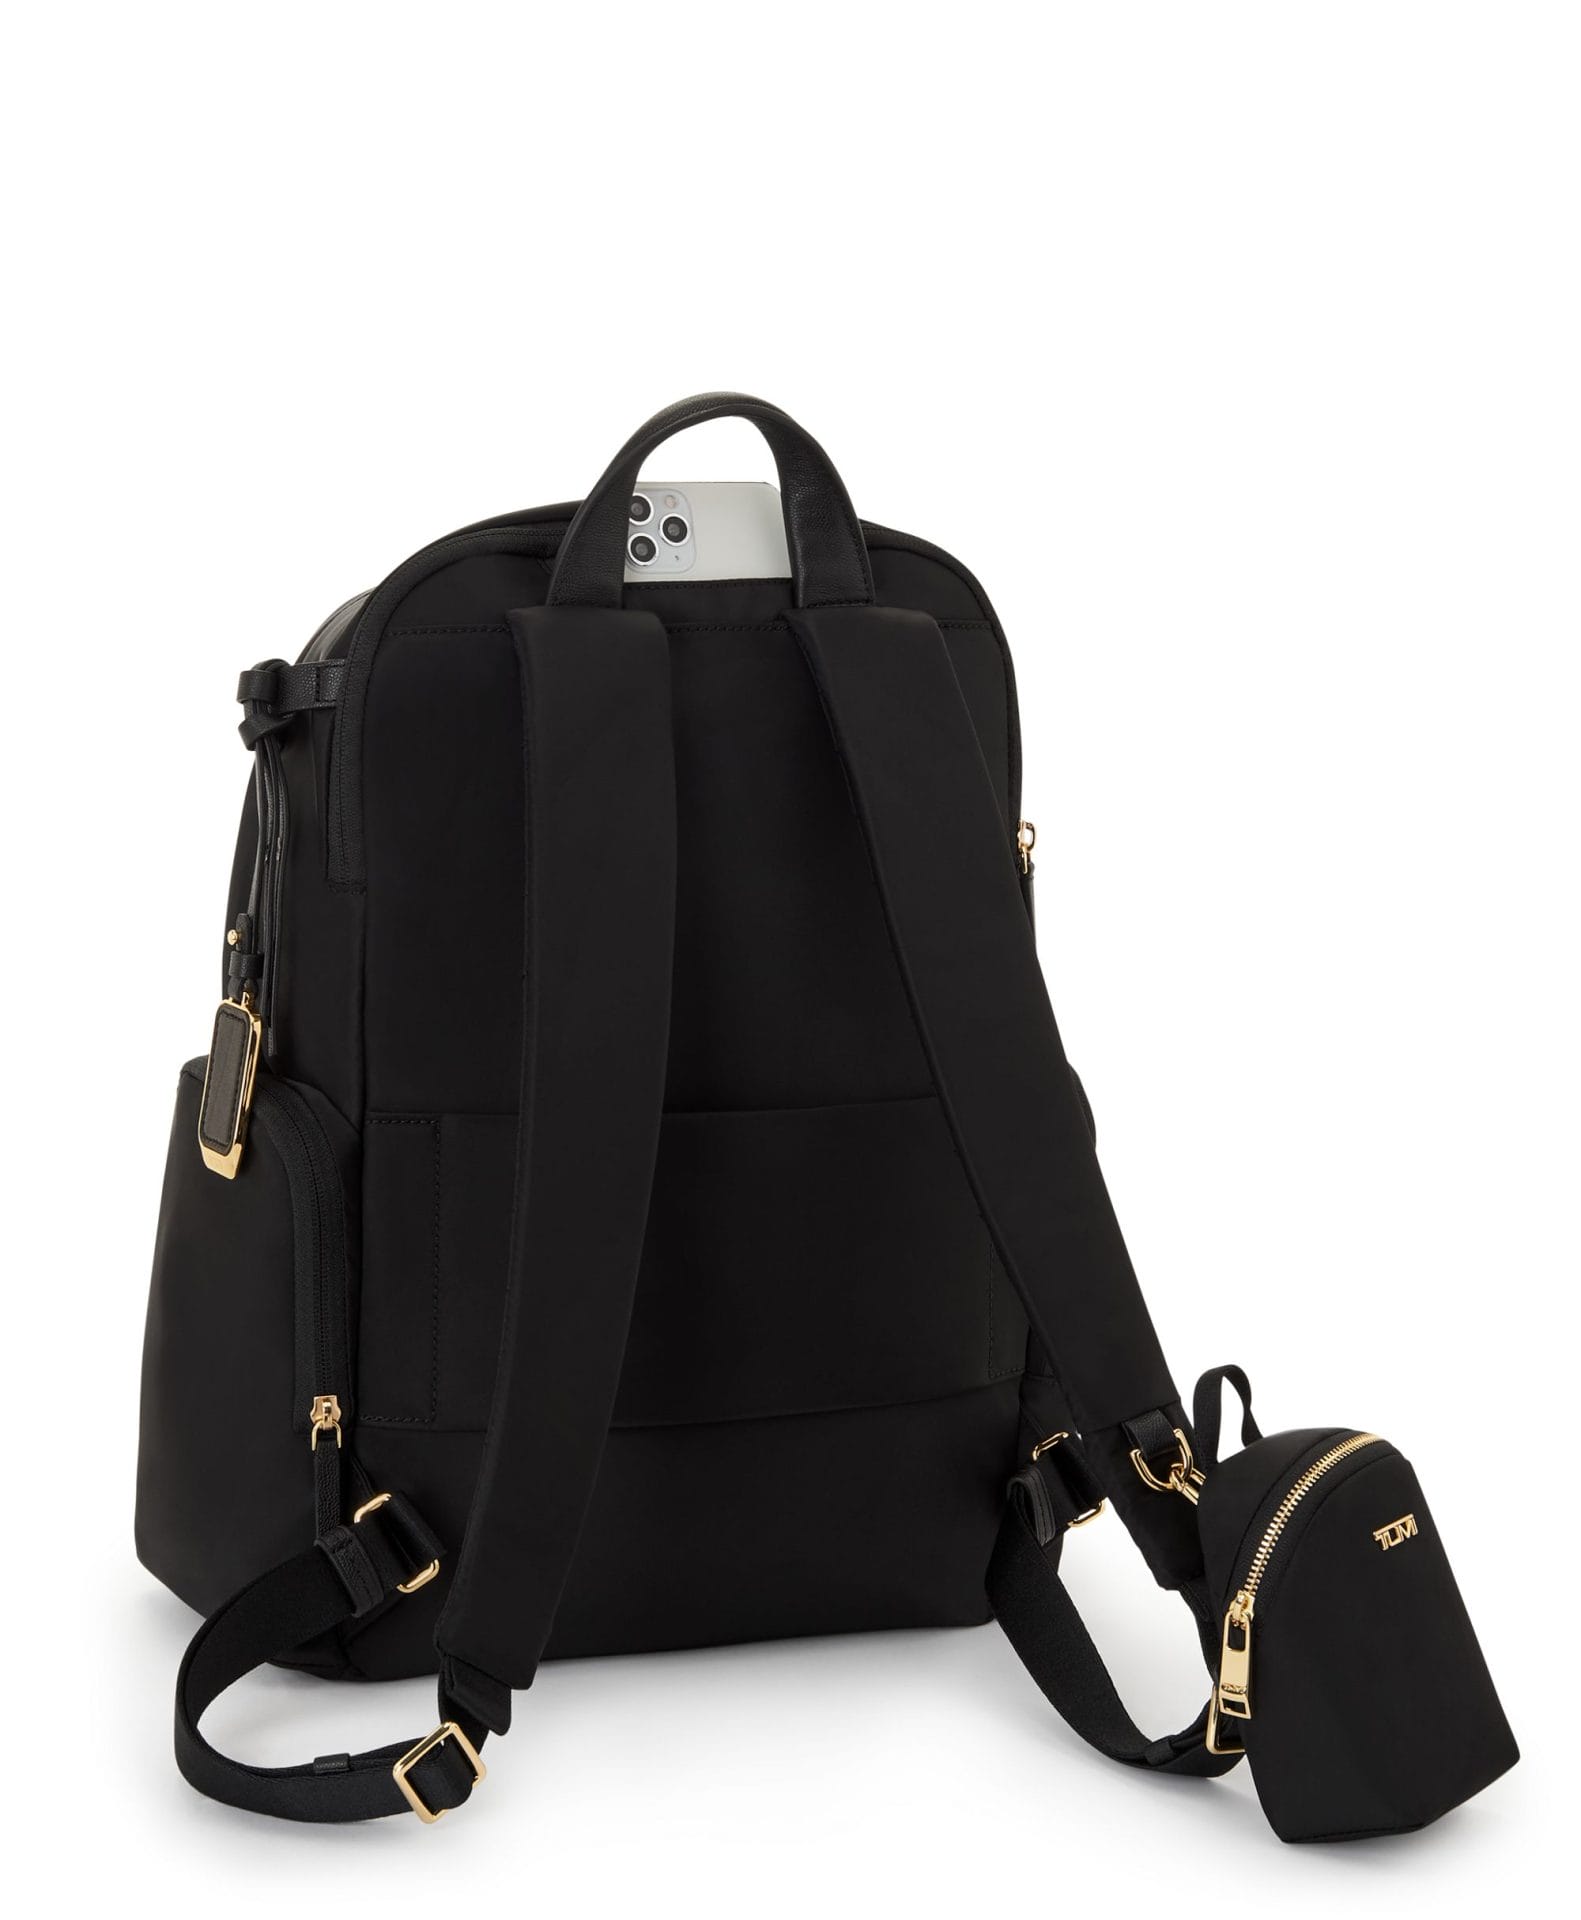 TUMI Voyageur Celina Backpack - Black/Gold - Irv’s Luggage